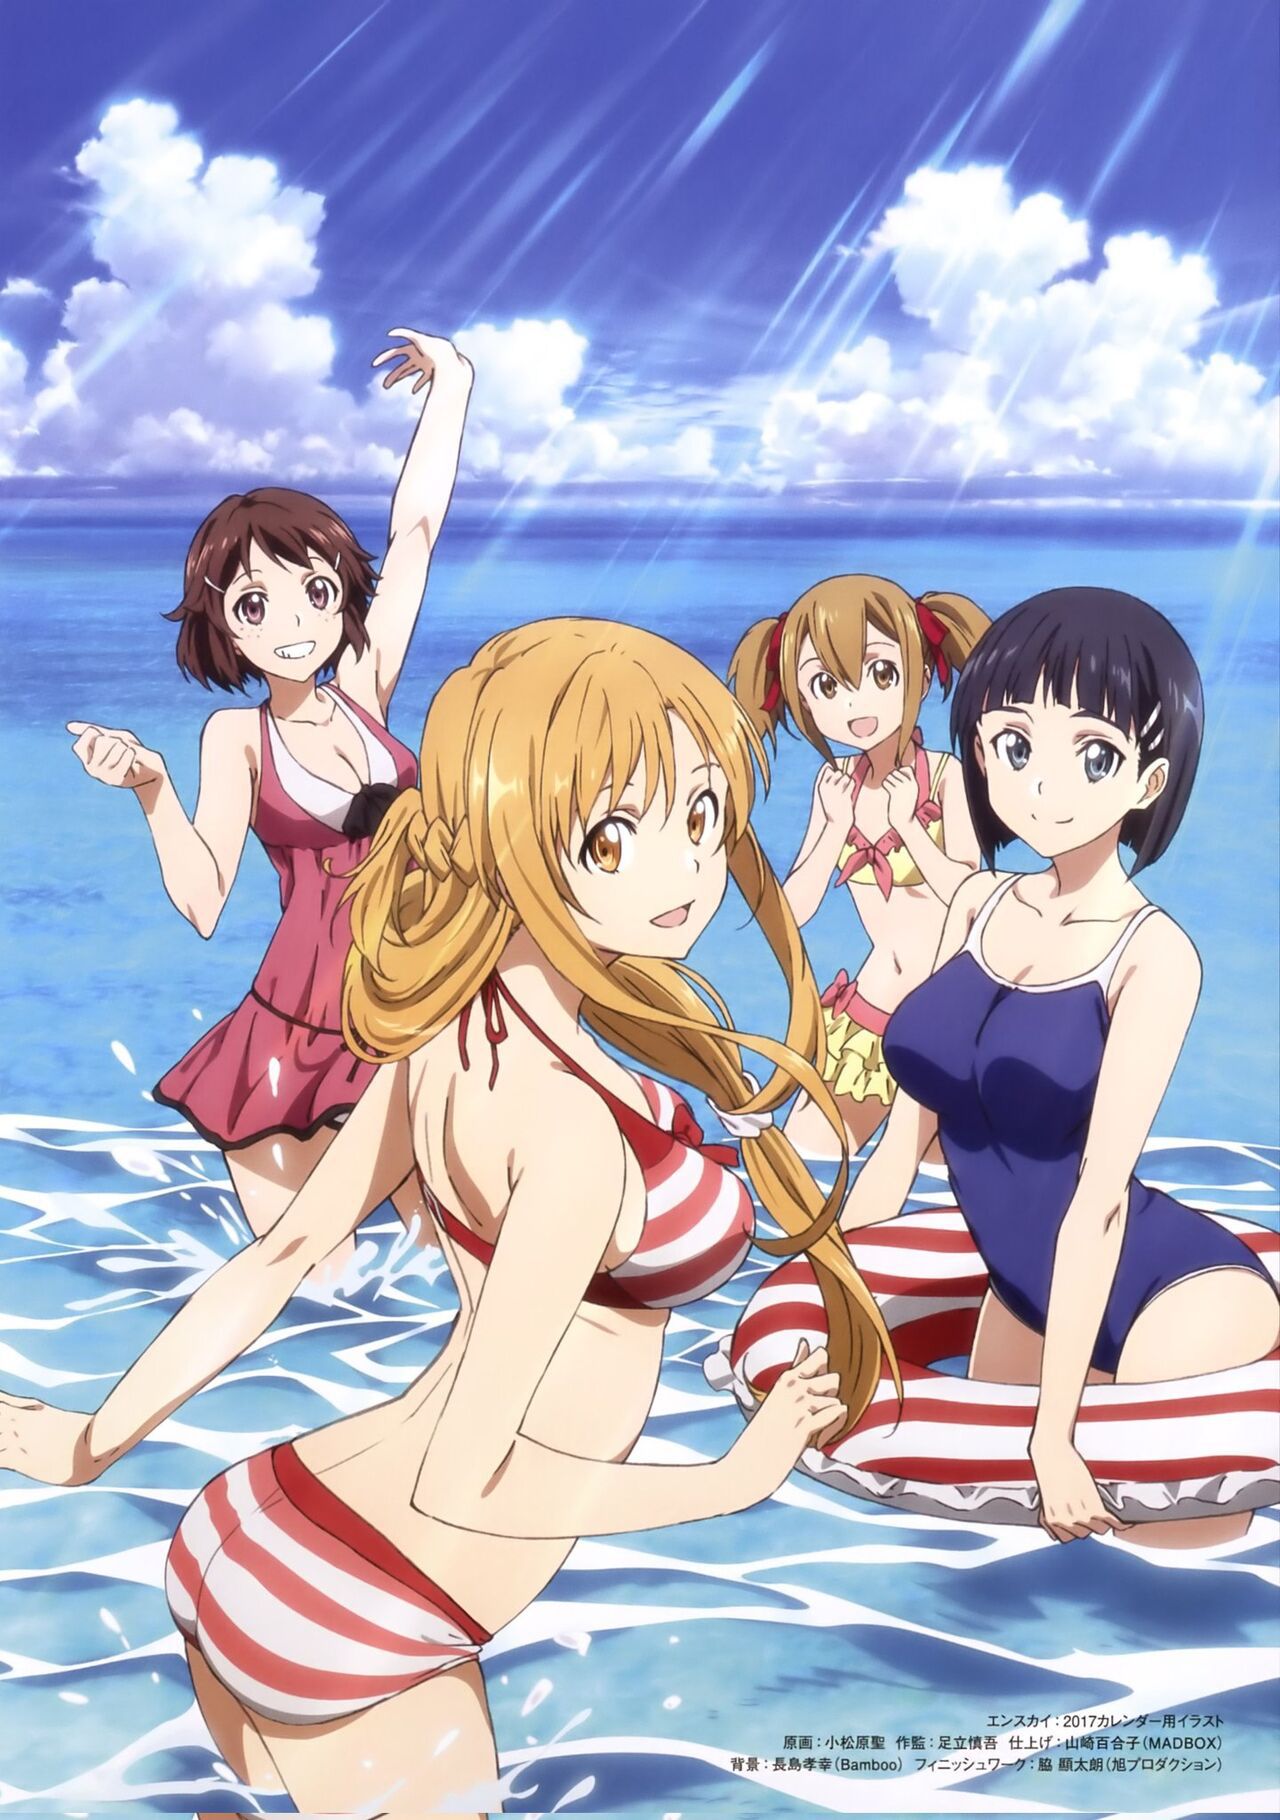 Anime girls in bikinis 101